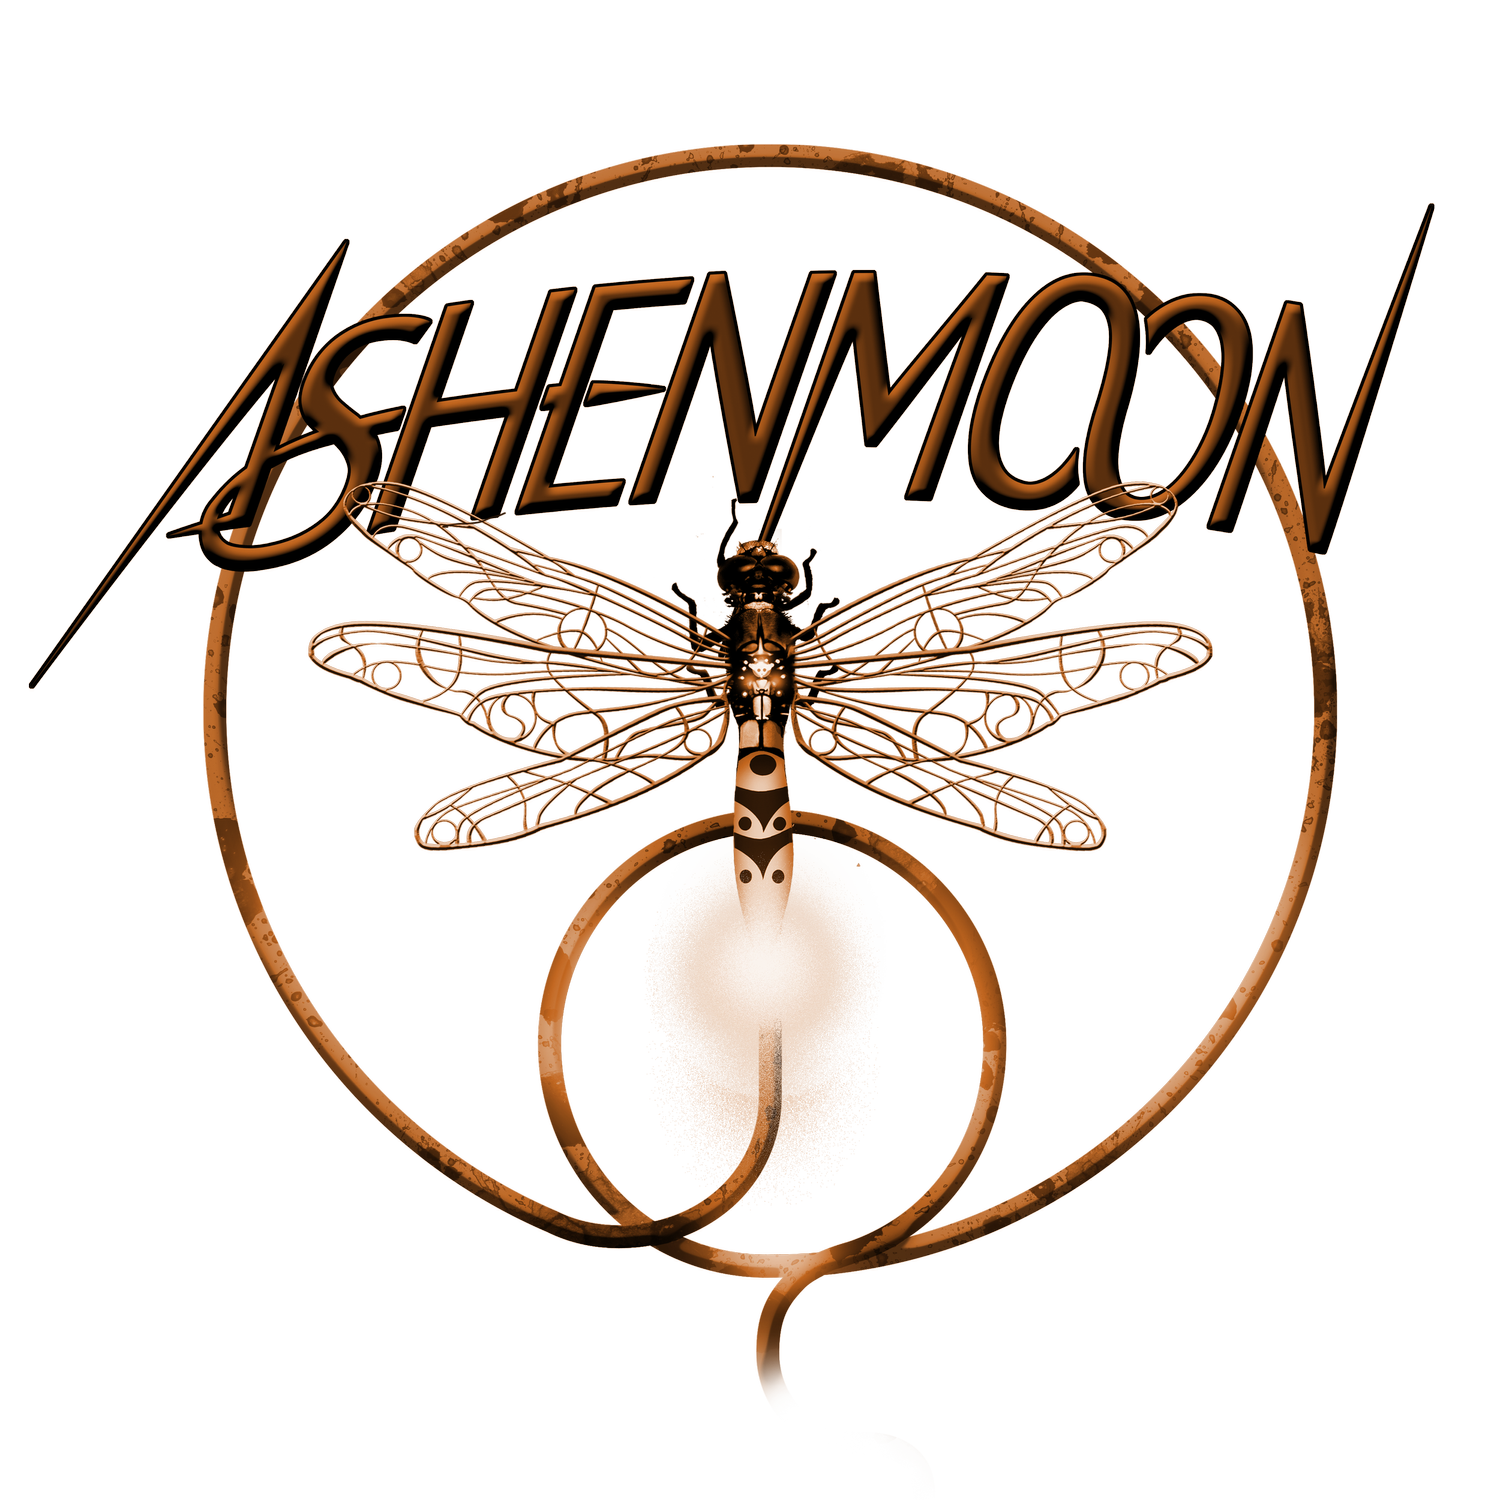 ASHENMOON